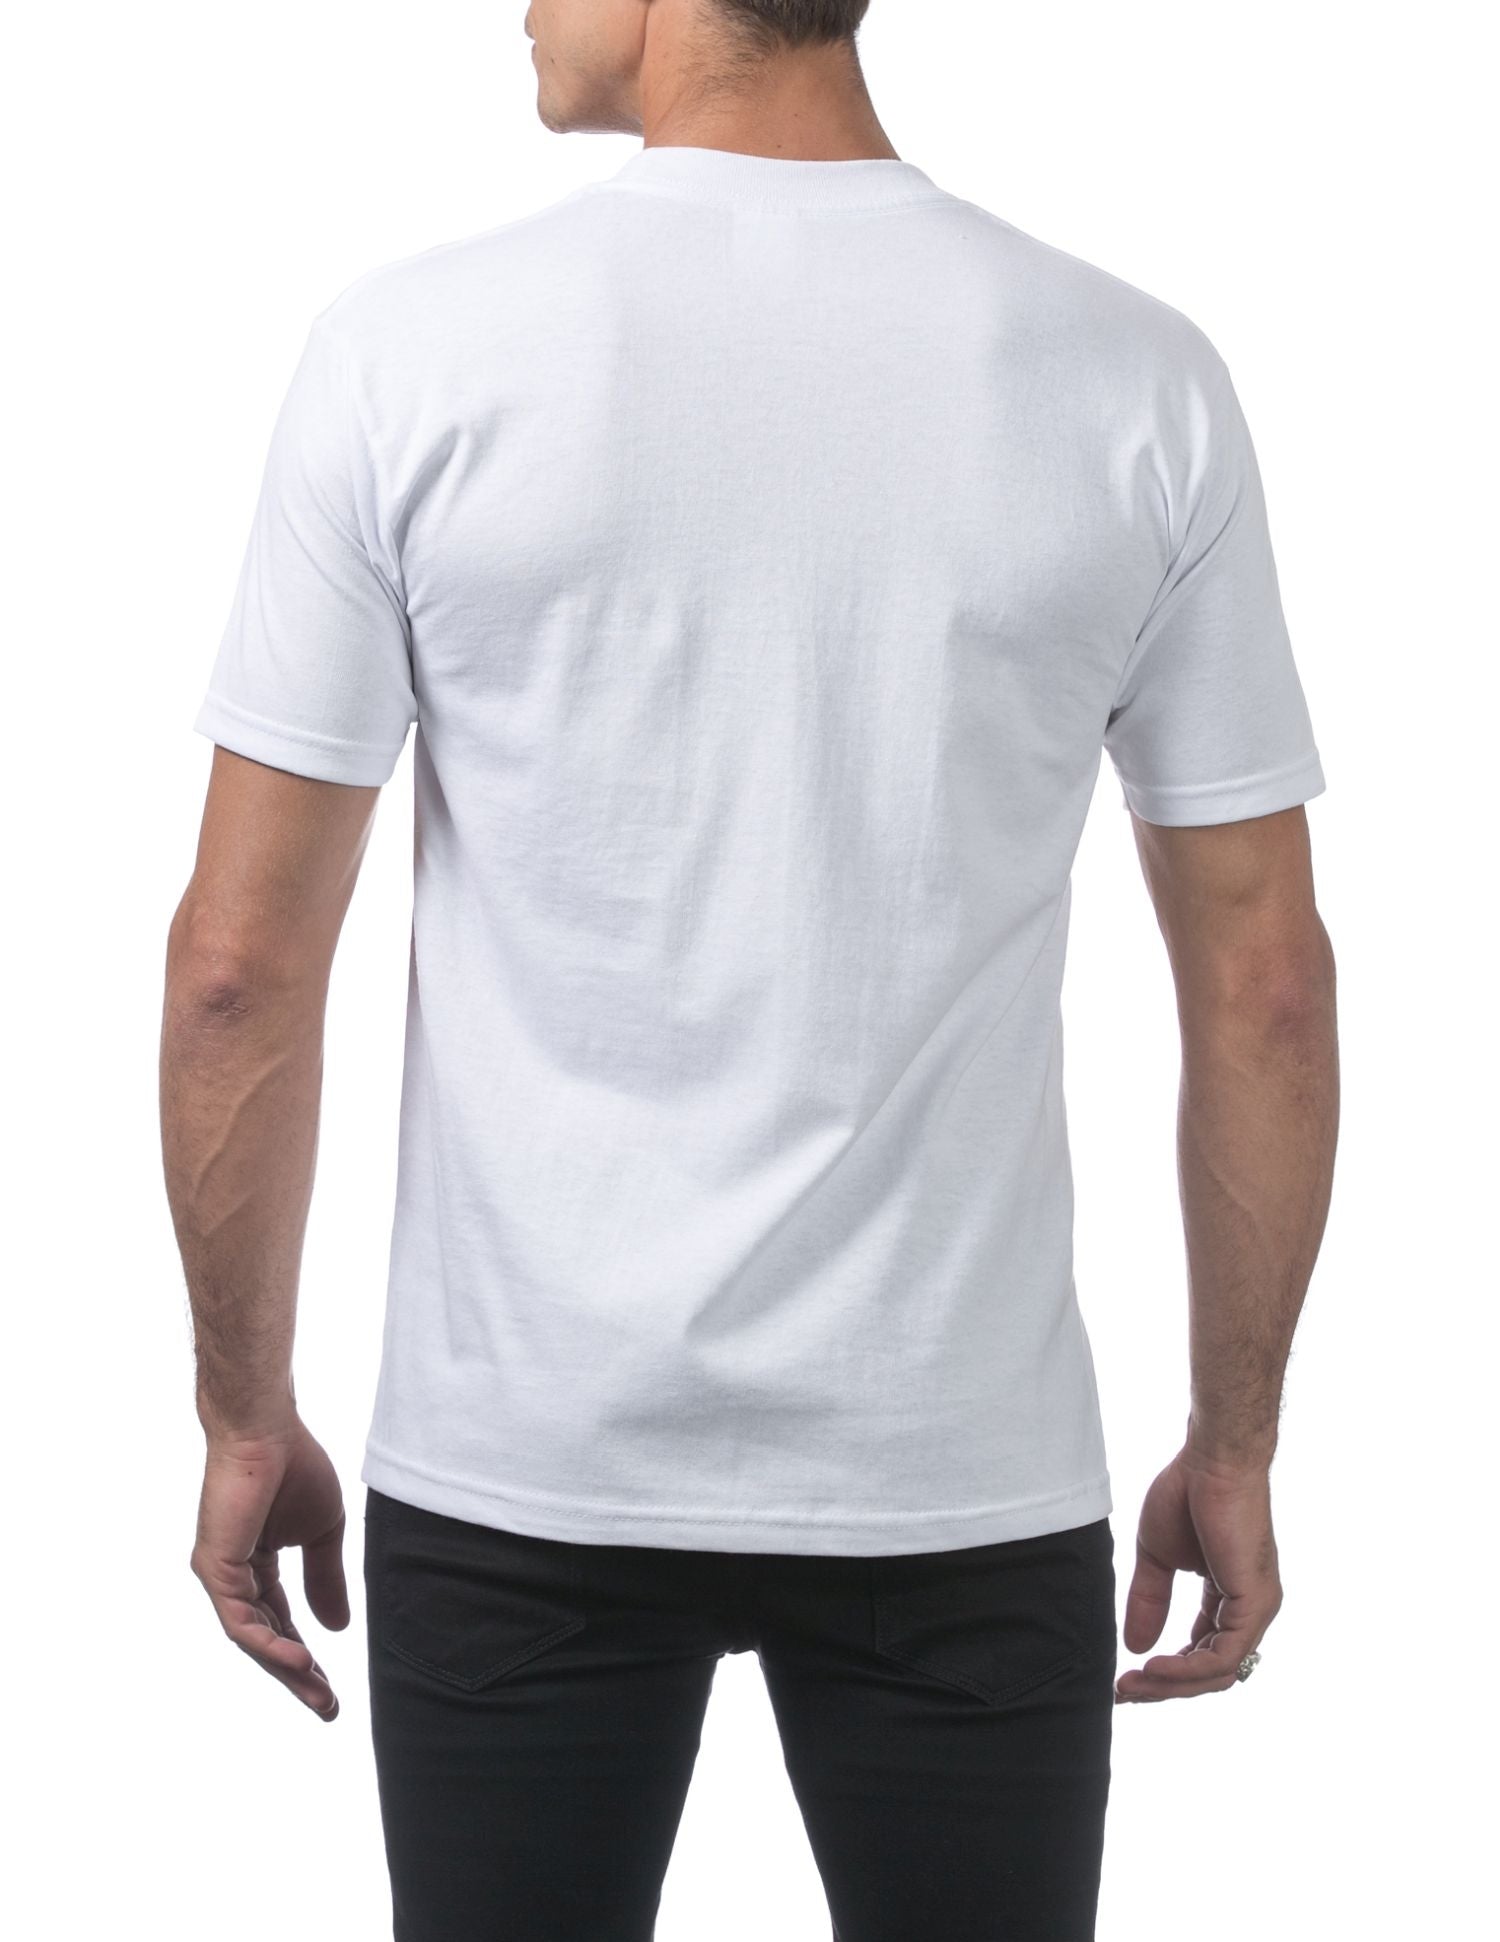 Pro Club Men's Comfort Cotton Short Sleeve T-Shirt - White - Large - Pro-Distributing